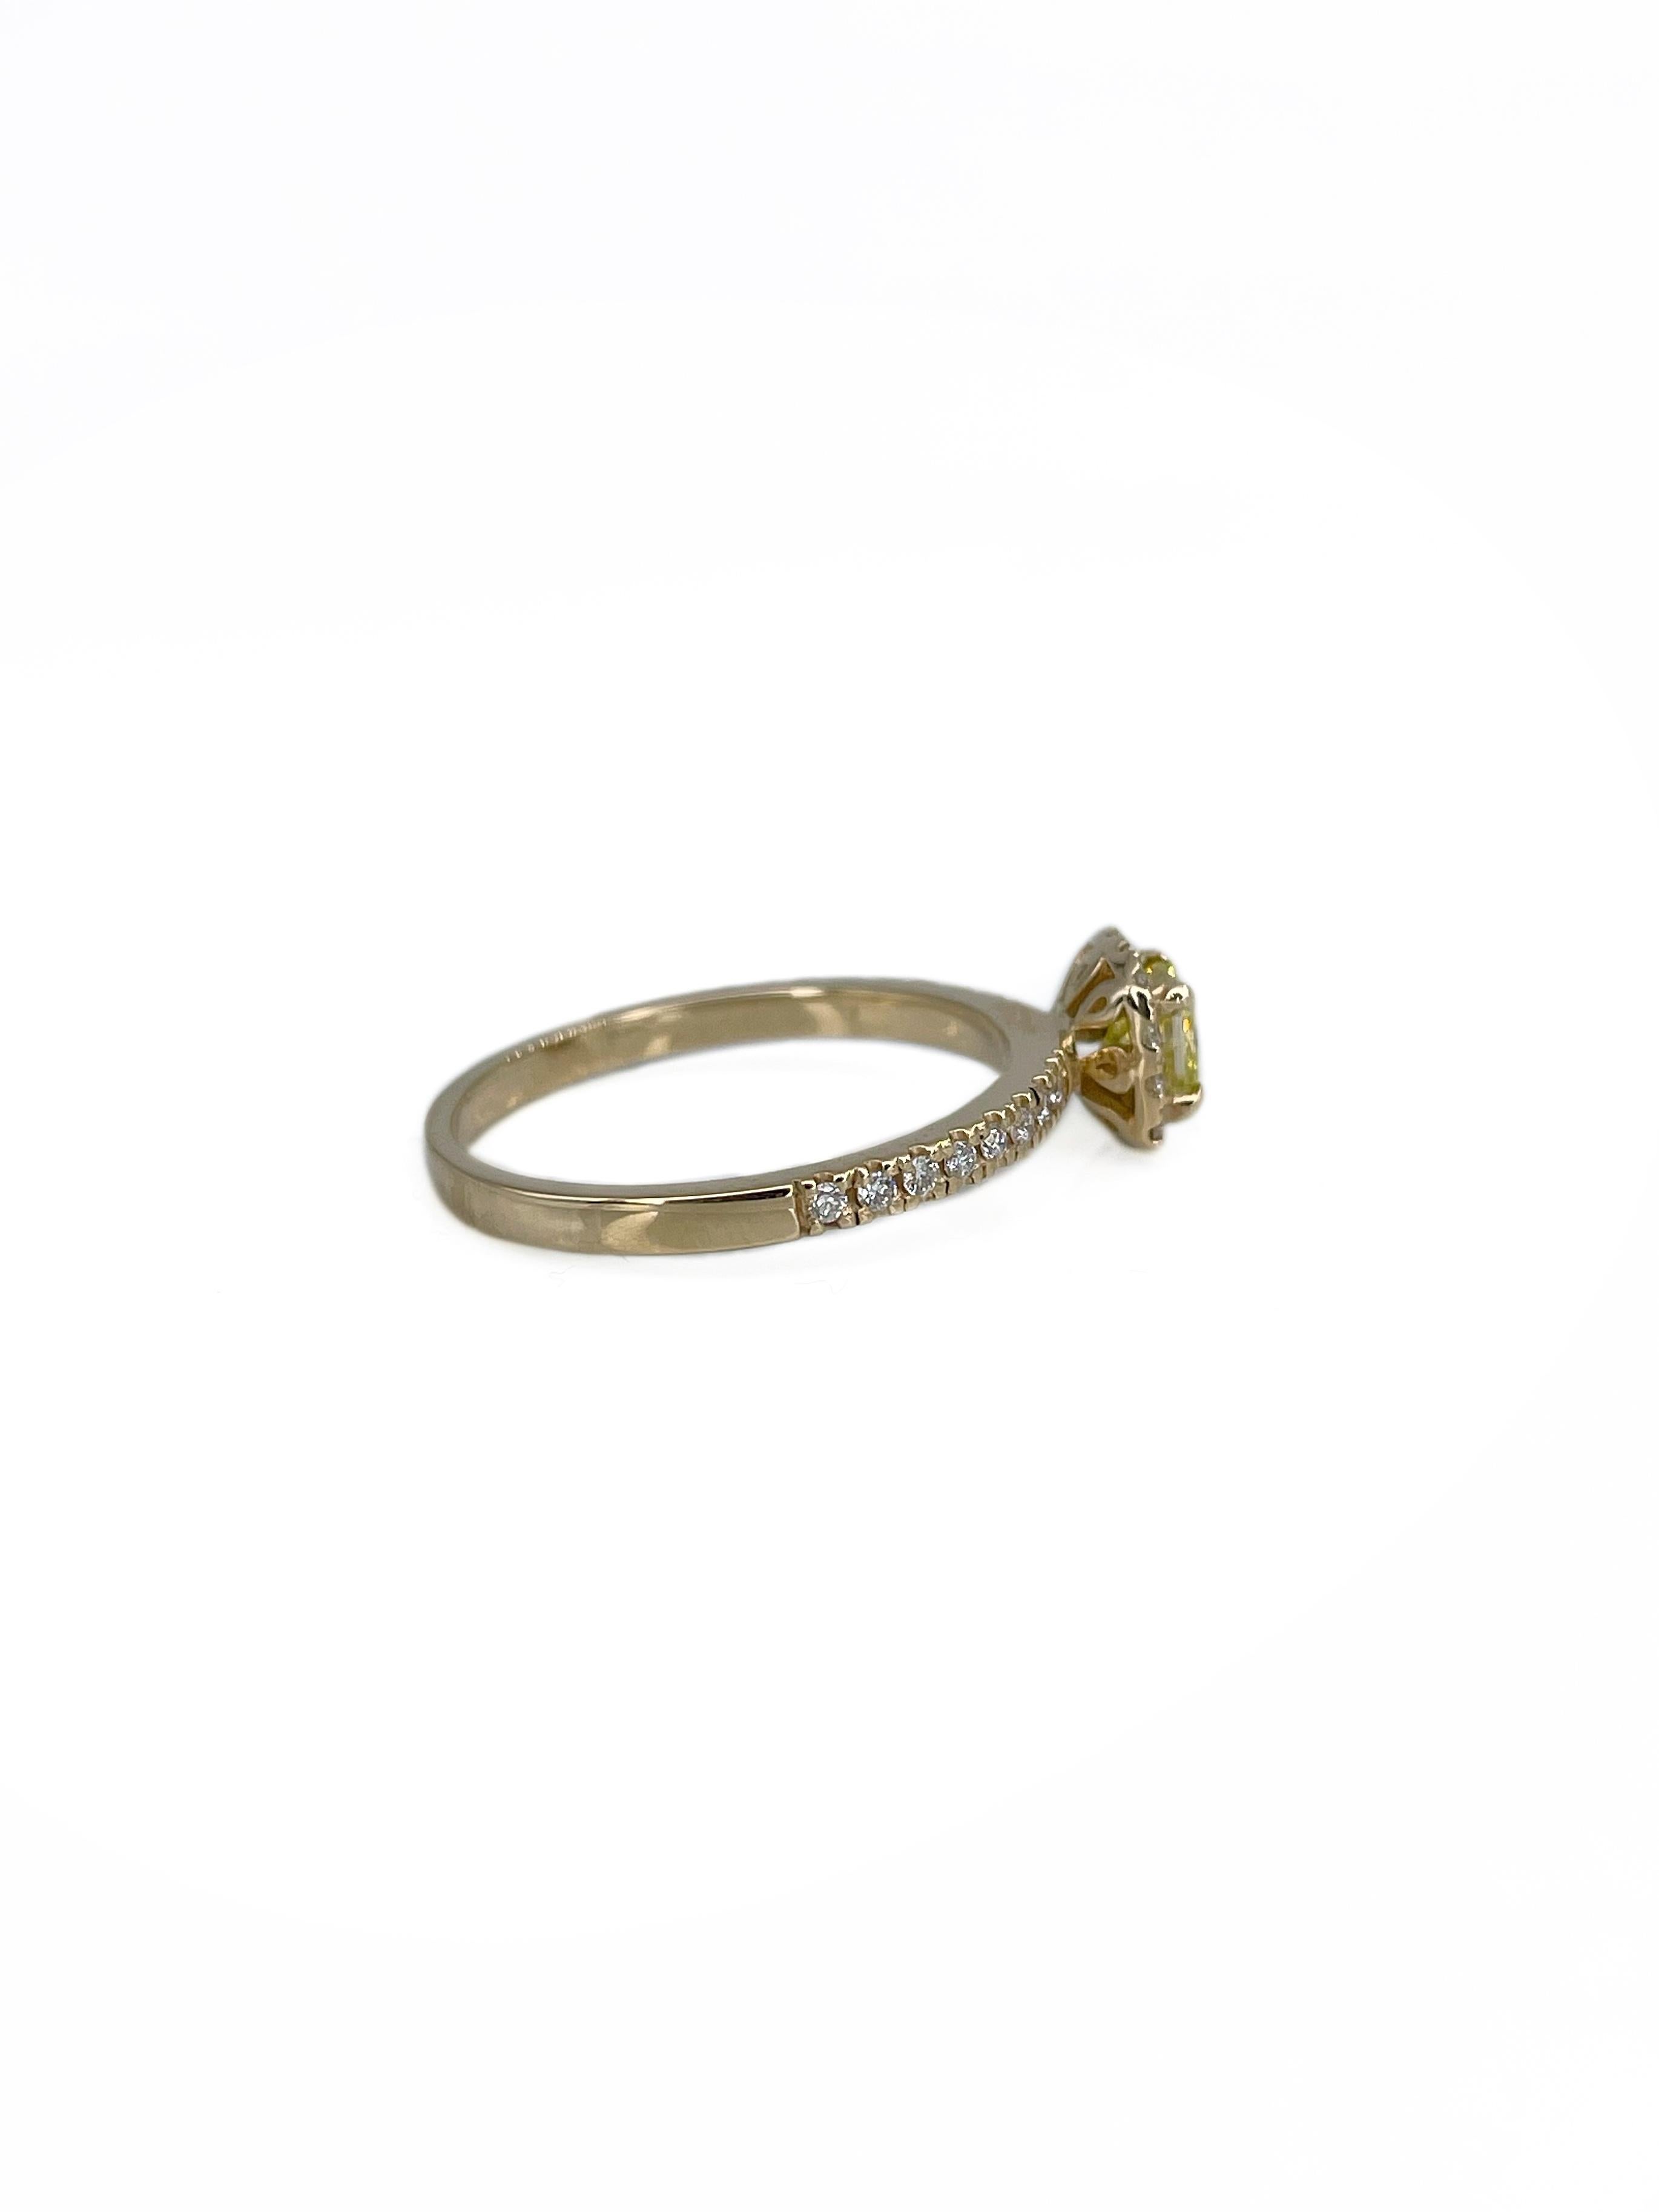 Cushion Cut Certified 18 Karat Gold 0.40 Carat Fancy Yellow Diamond Engagement Ring